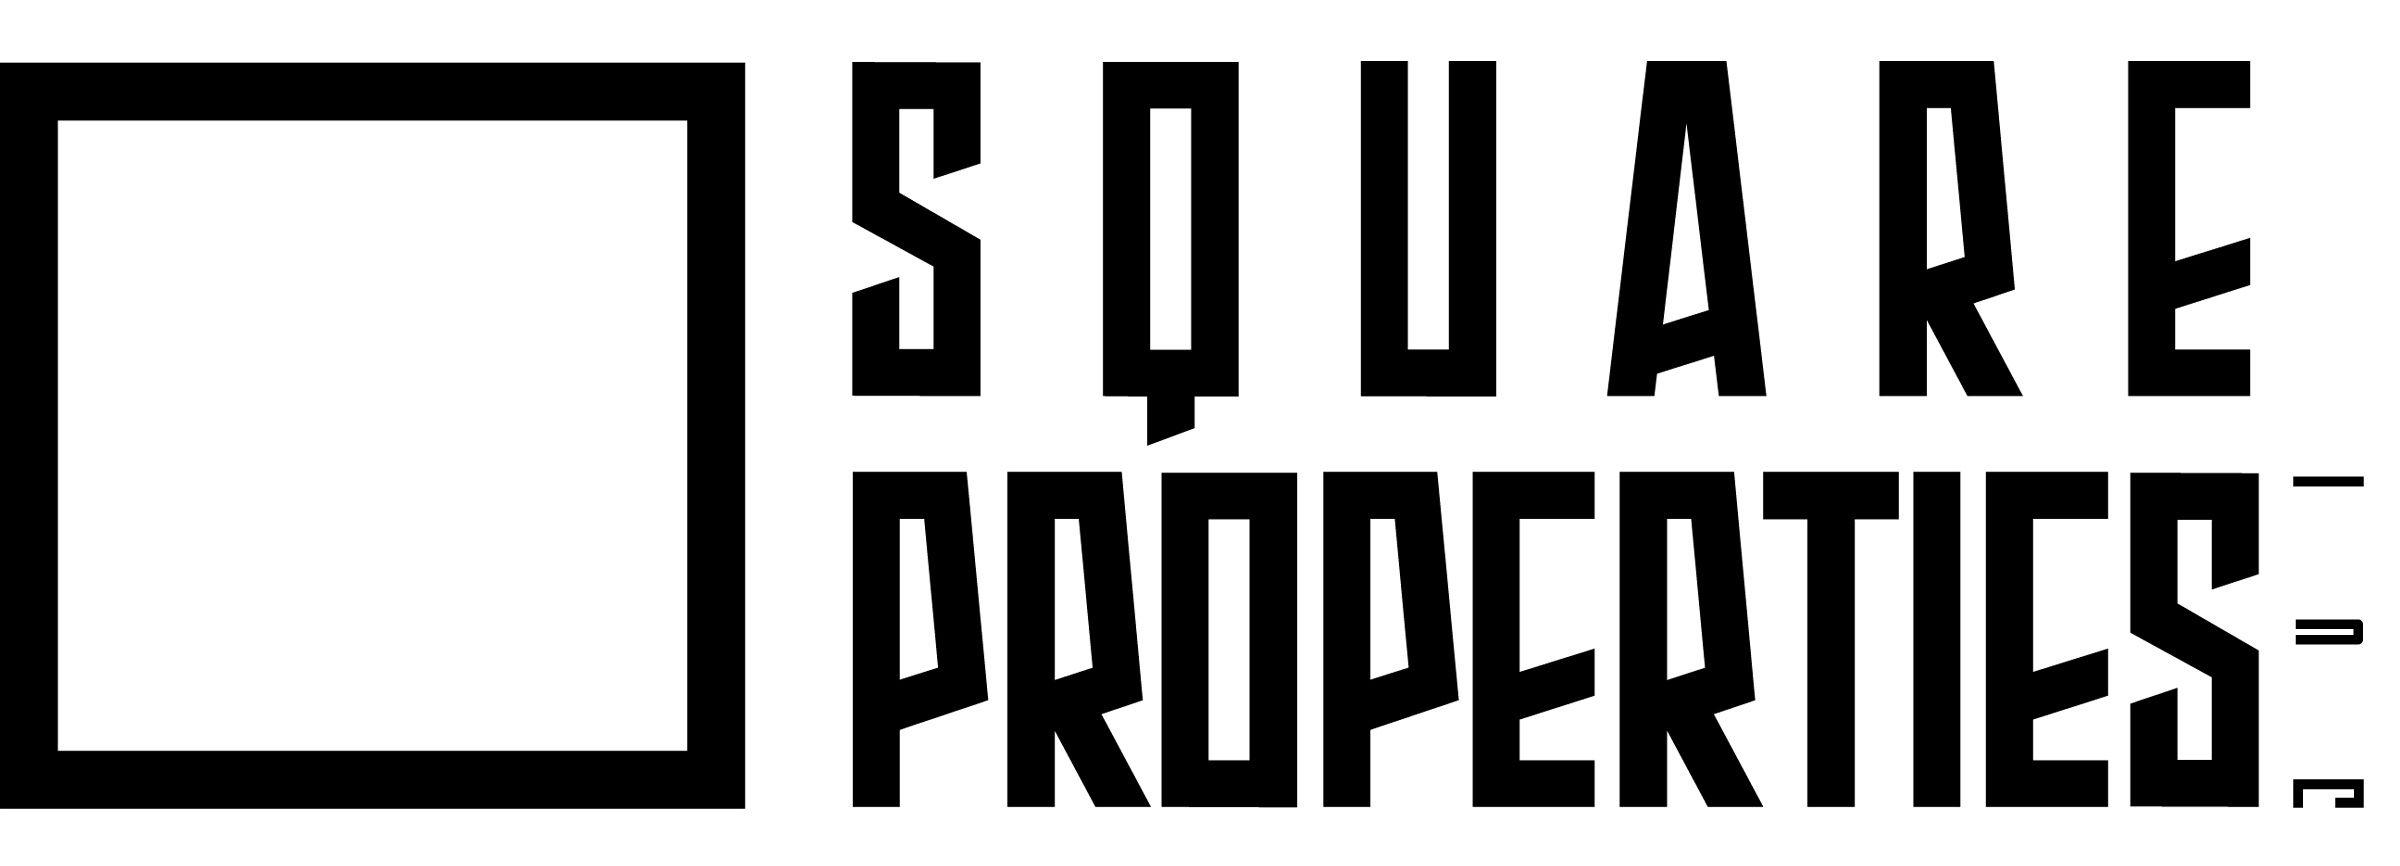 Open Square Logo - File:Square.Properties.Logo.jpg - Wikimedia Commons